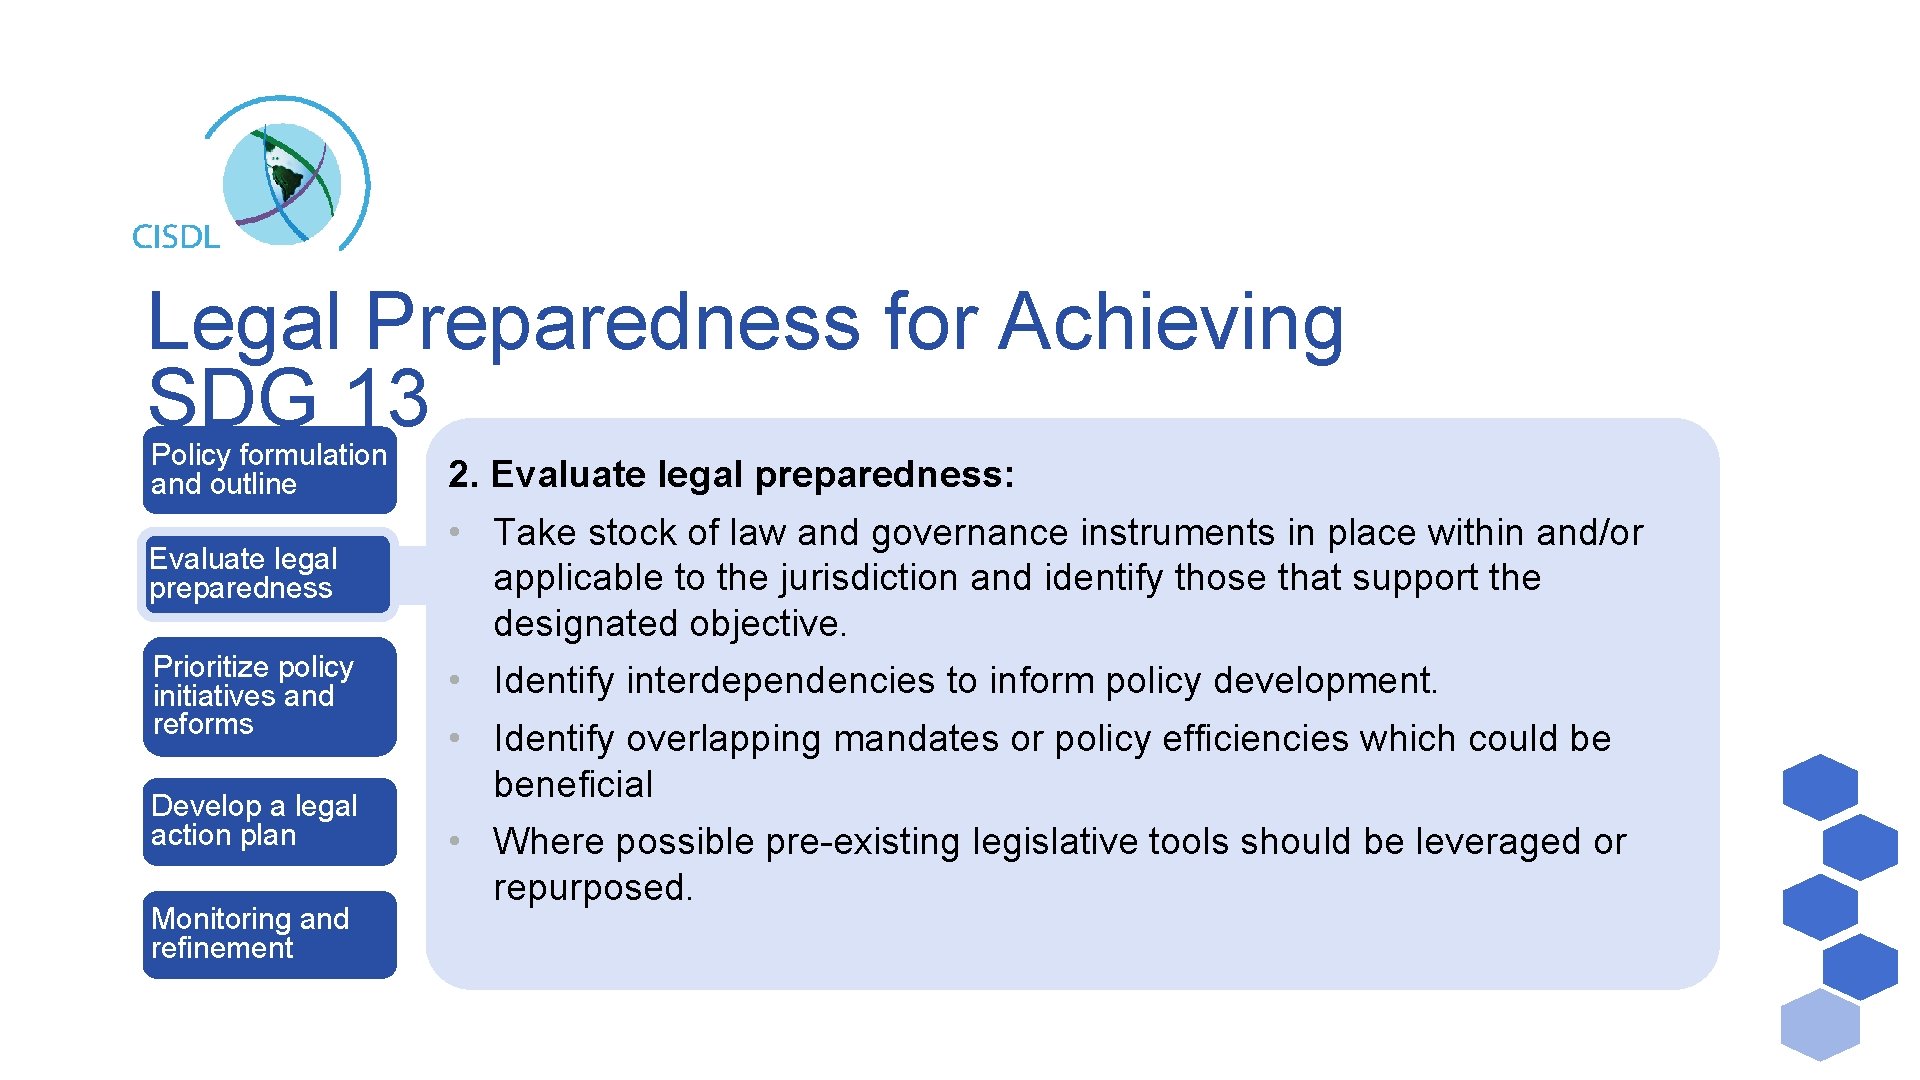 Legal Preparedness for Achieving SDG 13 Policy formulation and outline Evaluate legal preparedness Prioritize